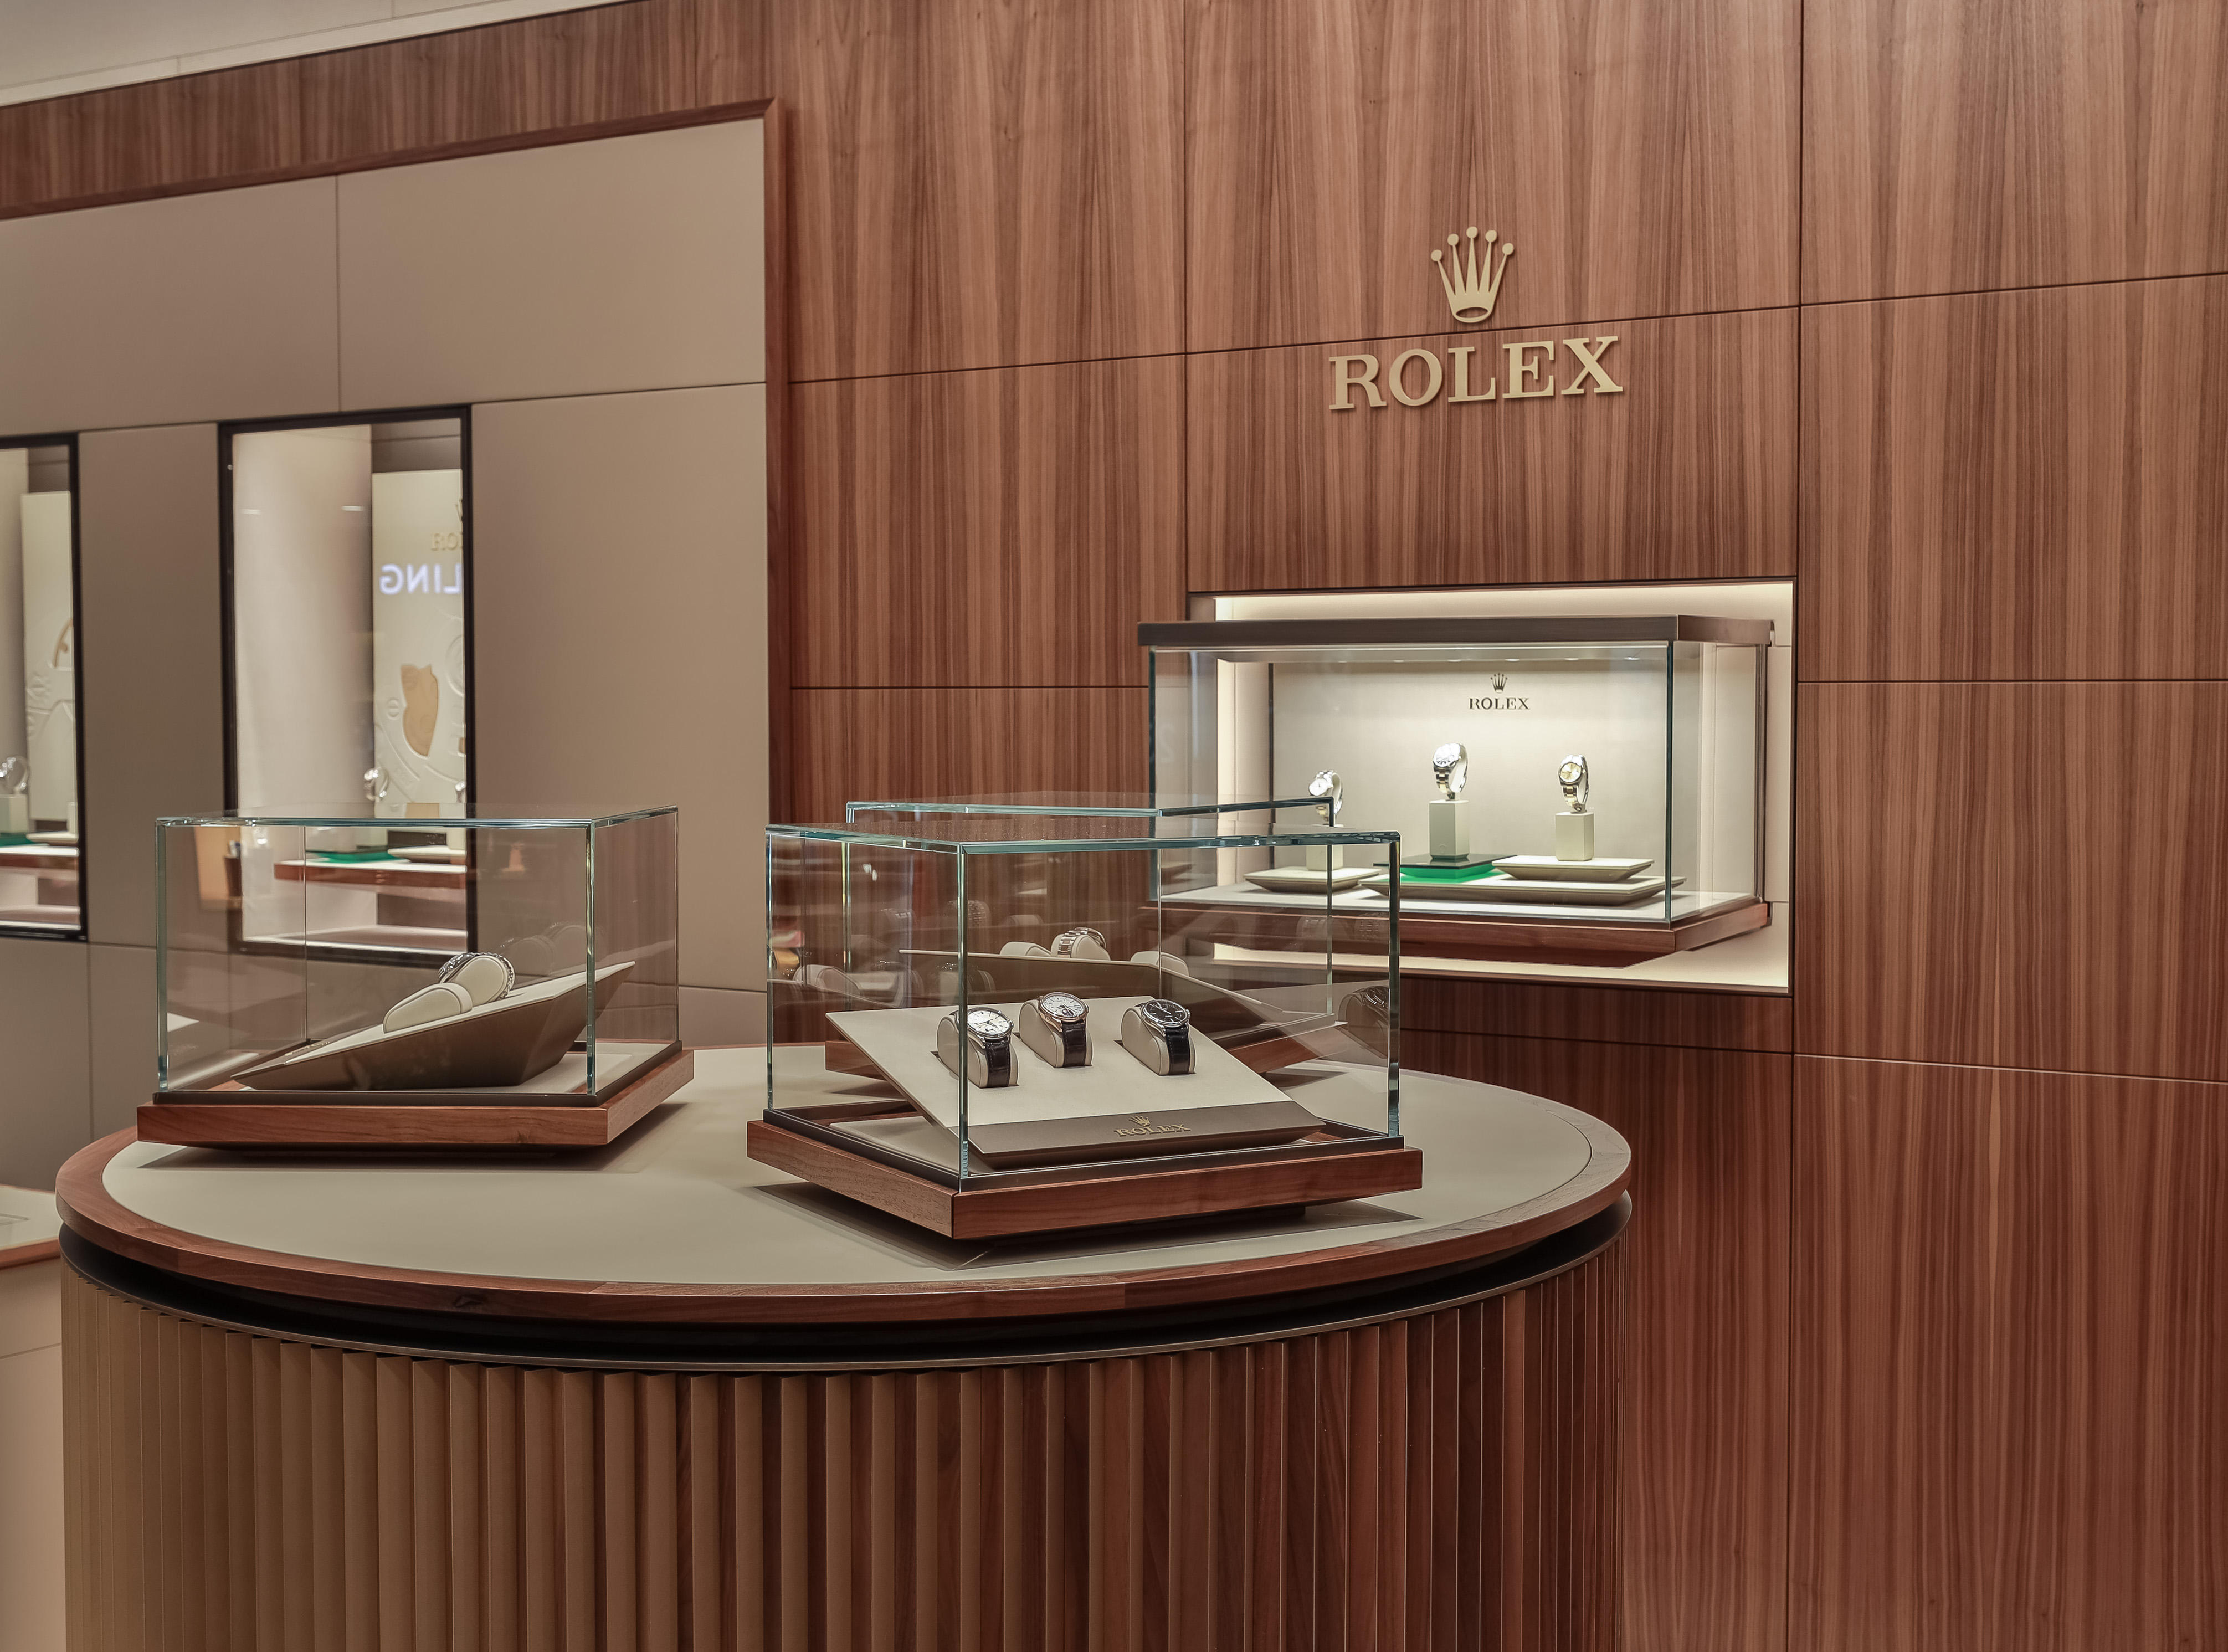 Images Jael Joyería | Official Rolex Retailer